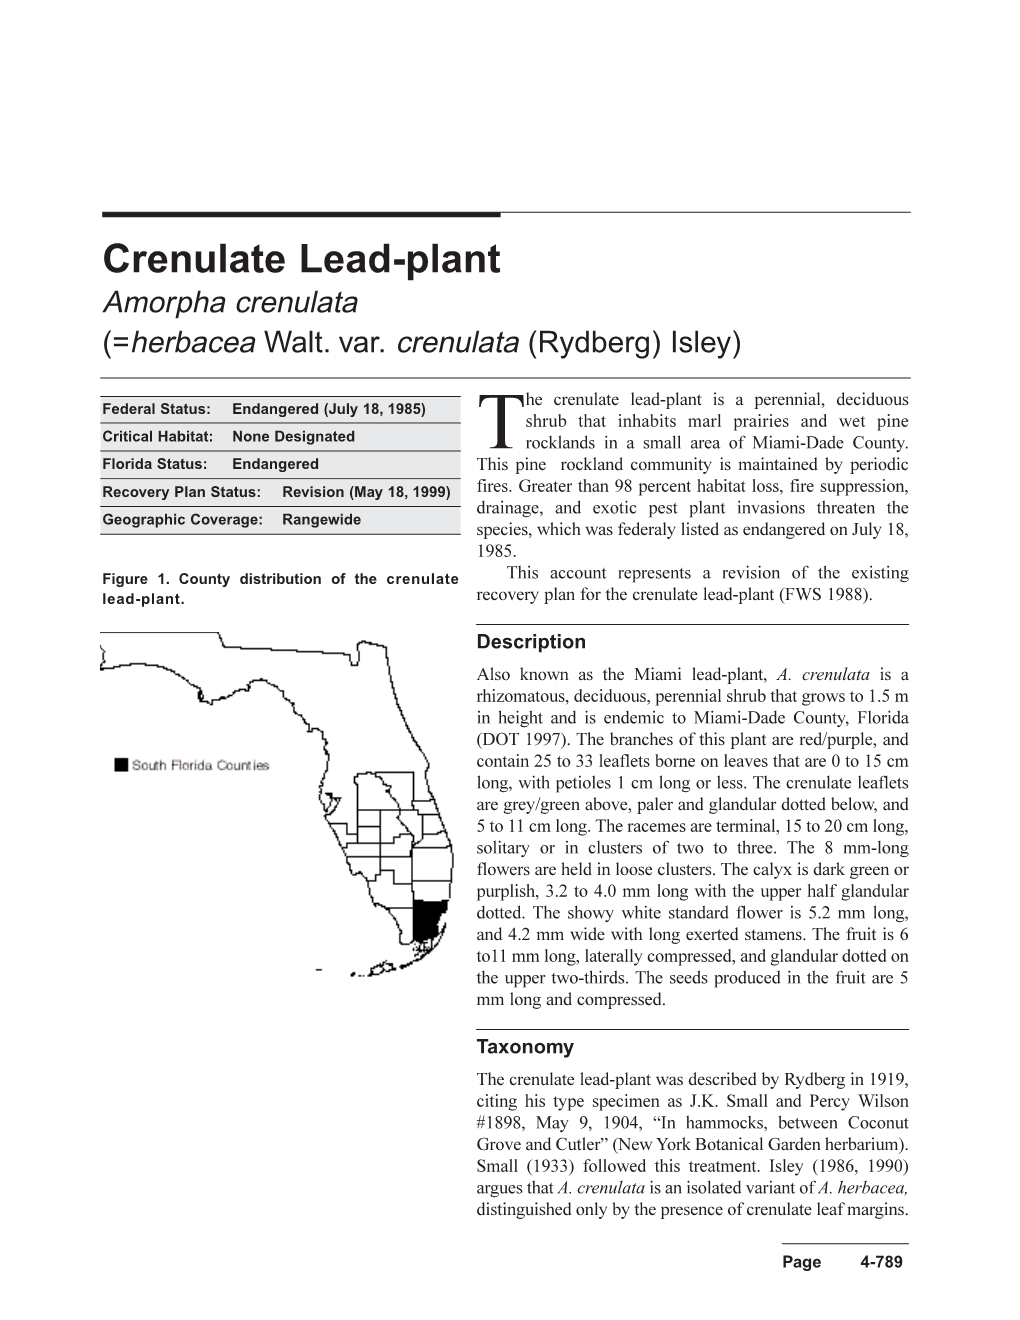 Crenulate Lead-Plant Amorpha Crenulata (=Herbacea Walt